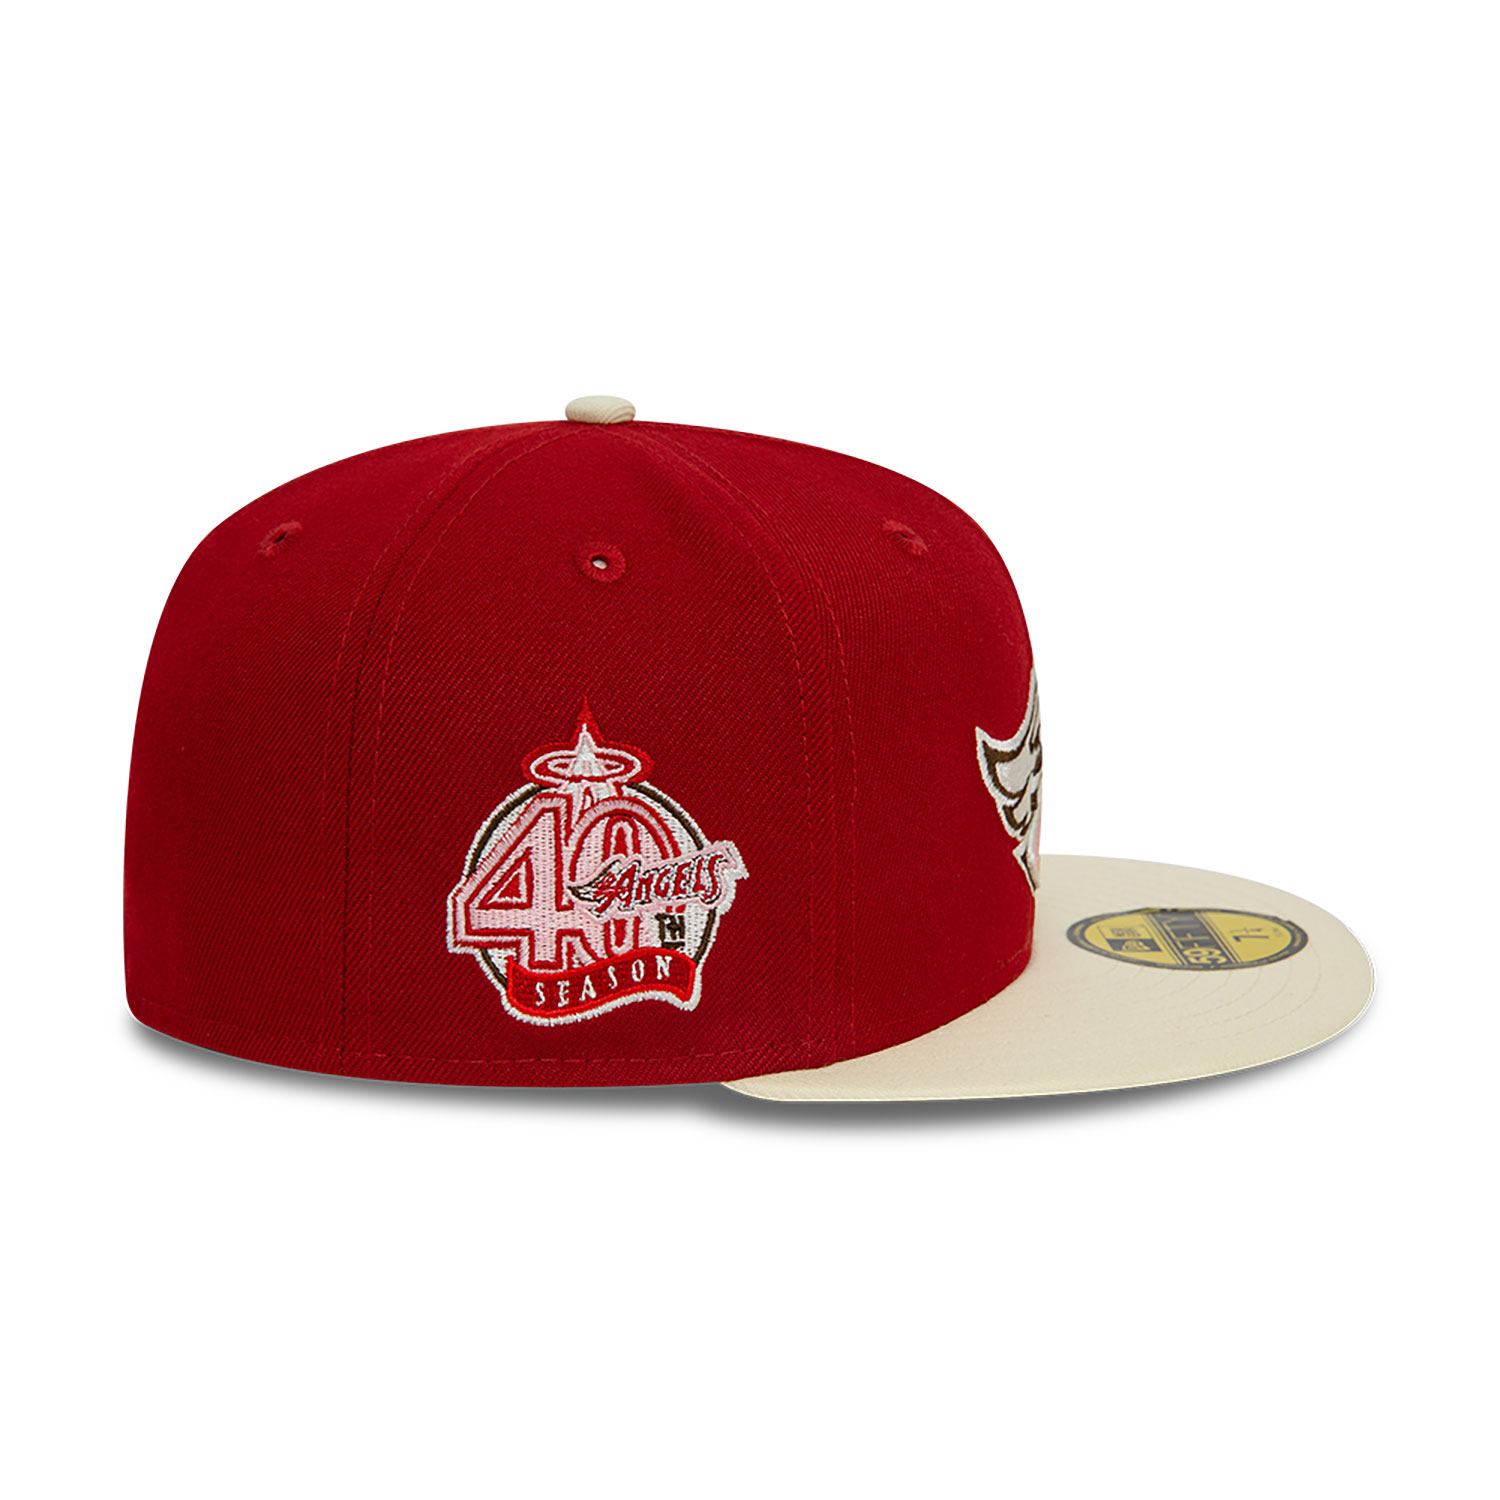 Anaheim Angels Dark Red 59FIFTY Fitted Cap